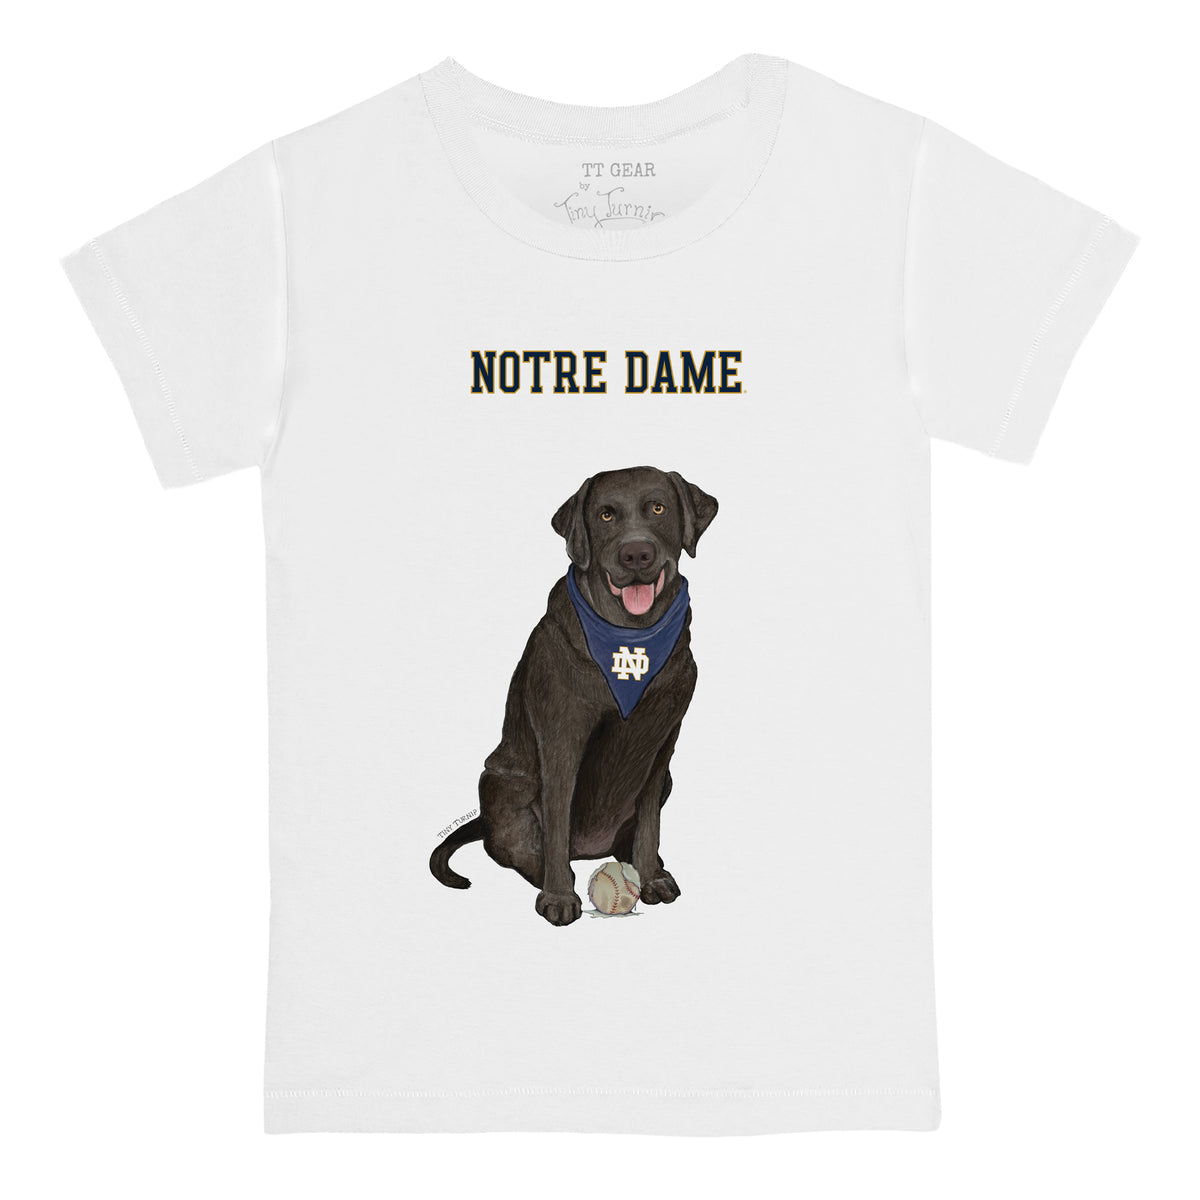 Notre Dame Fighting Irish Black Labrador Retriever Tee Shirt